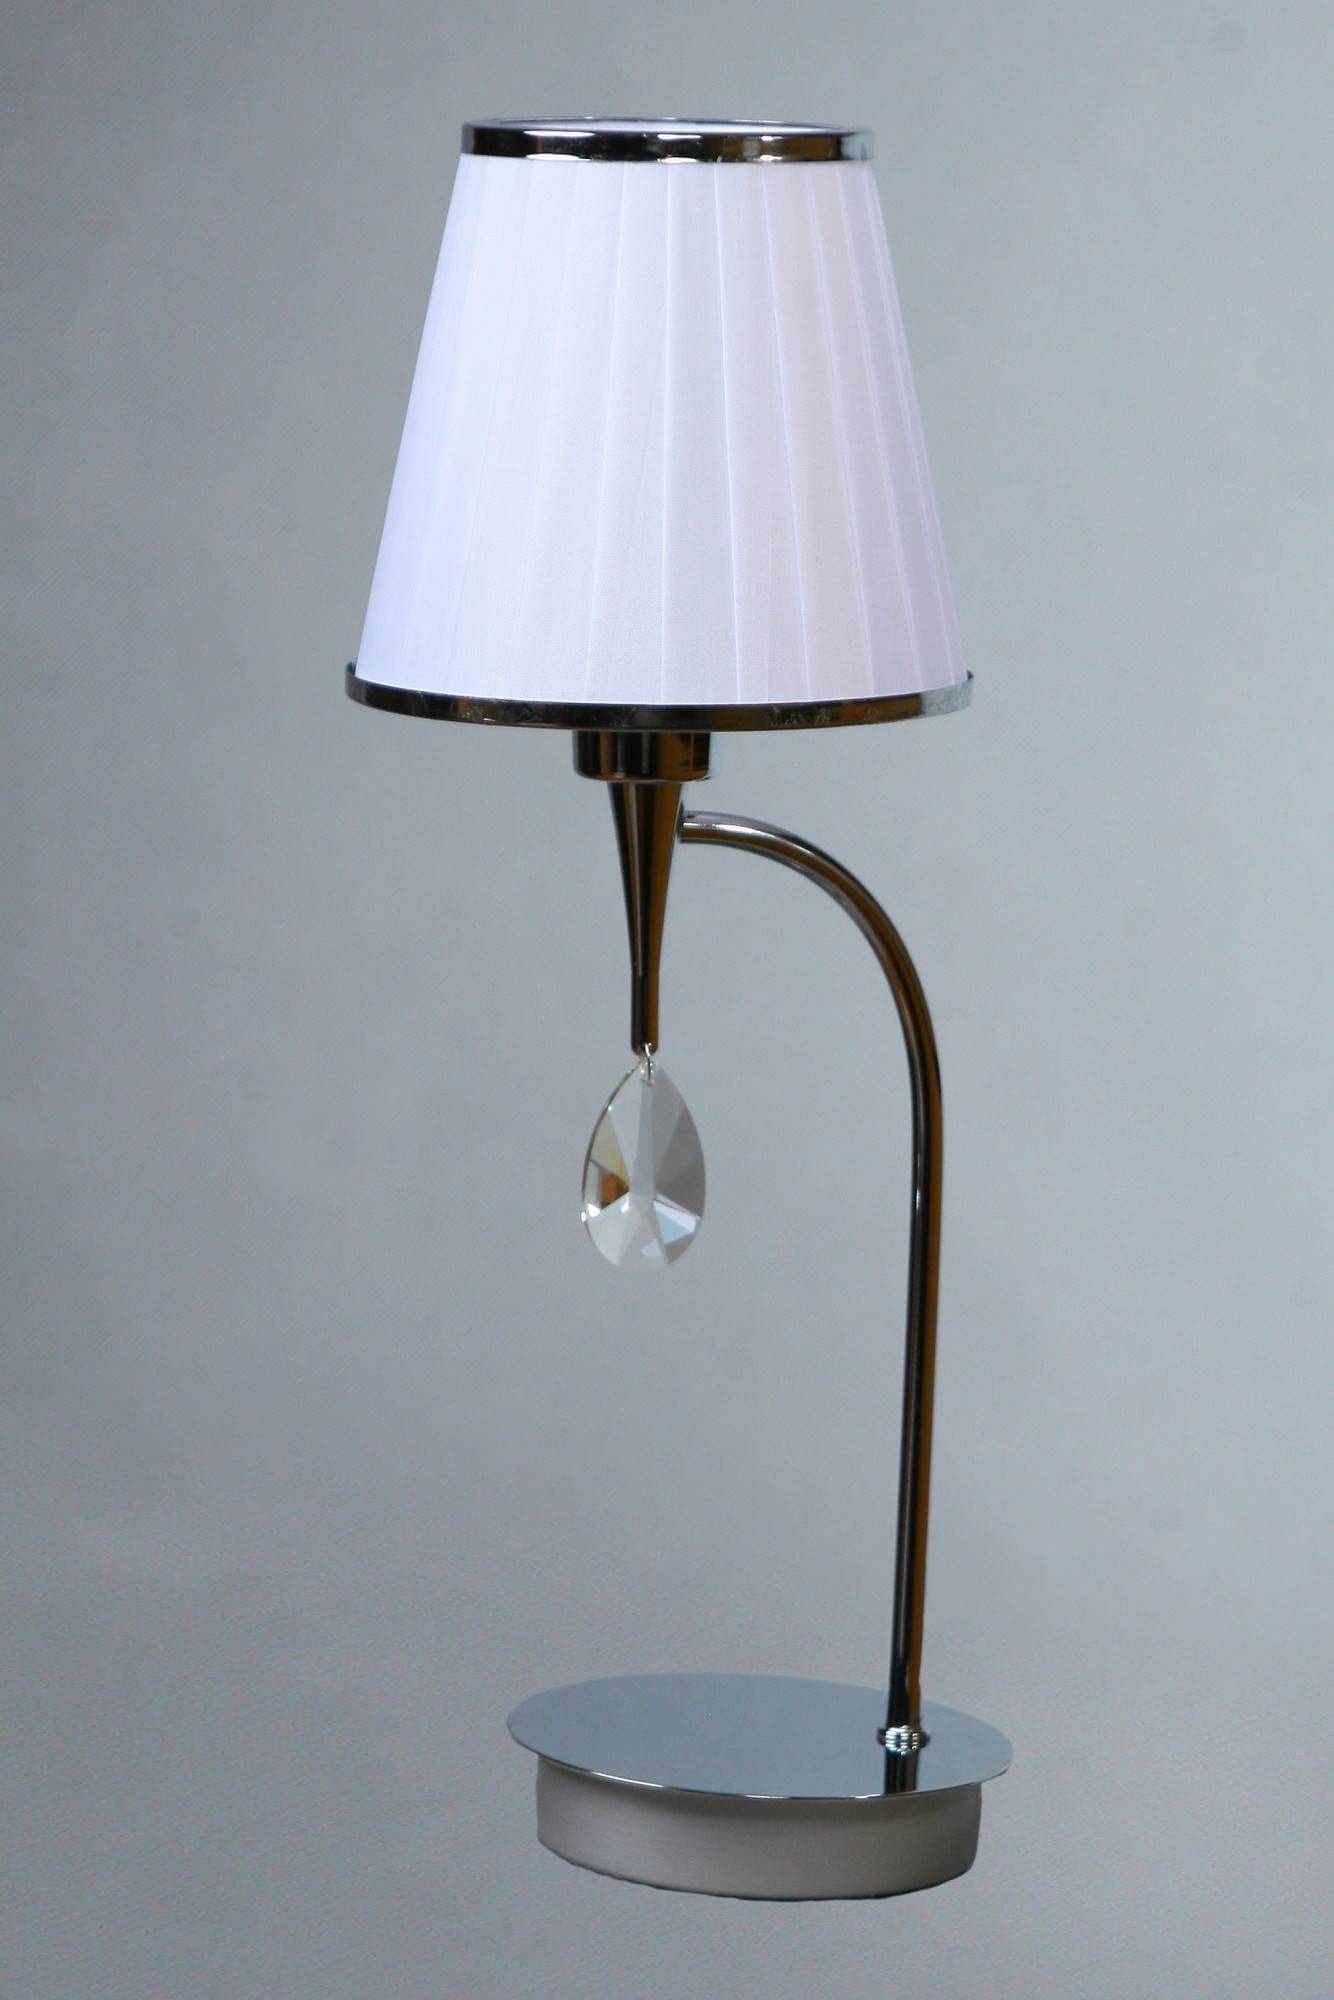 Настольная лампа Ambiente by Brizzi Alore Bronze MA 01625T/001 Chrome